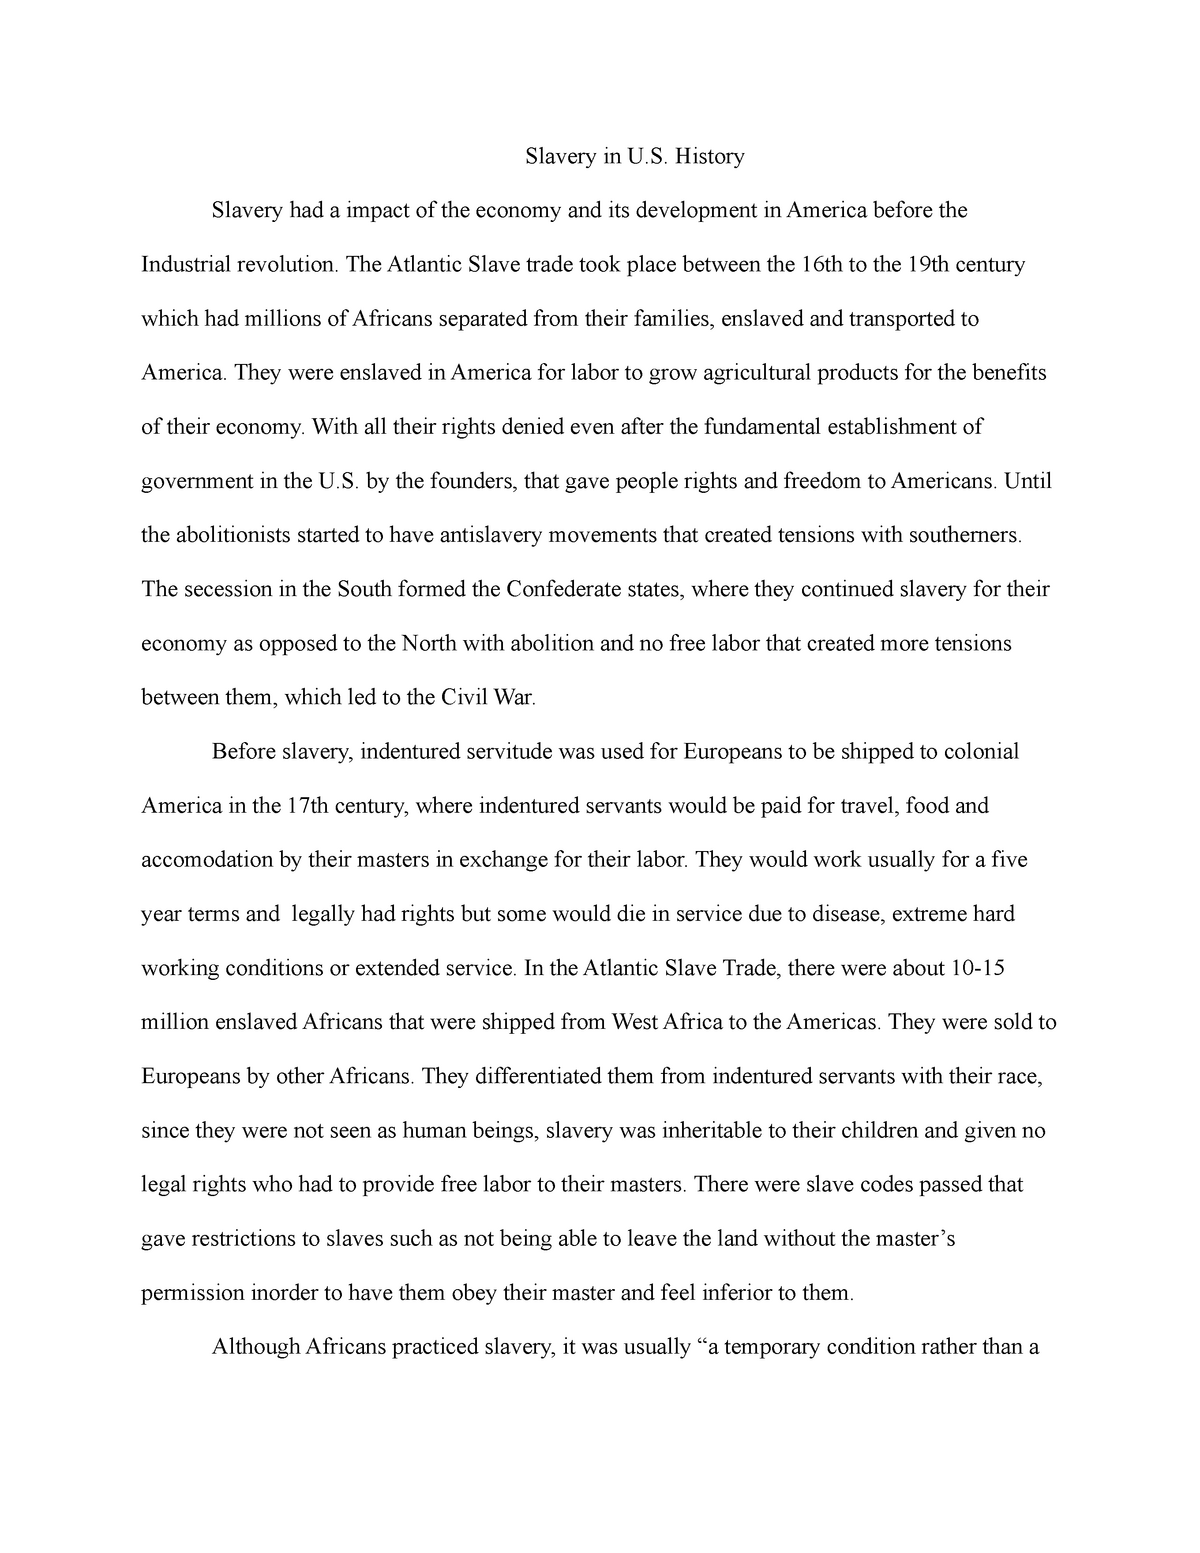 essay against slavery